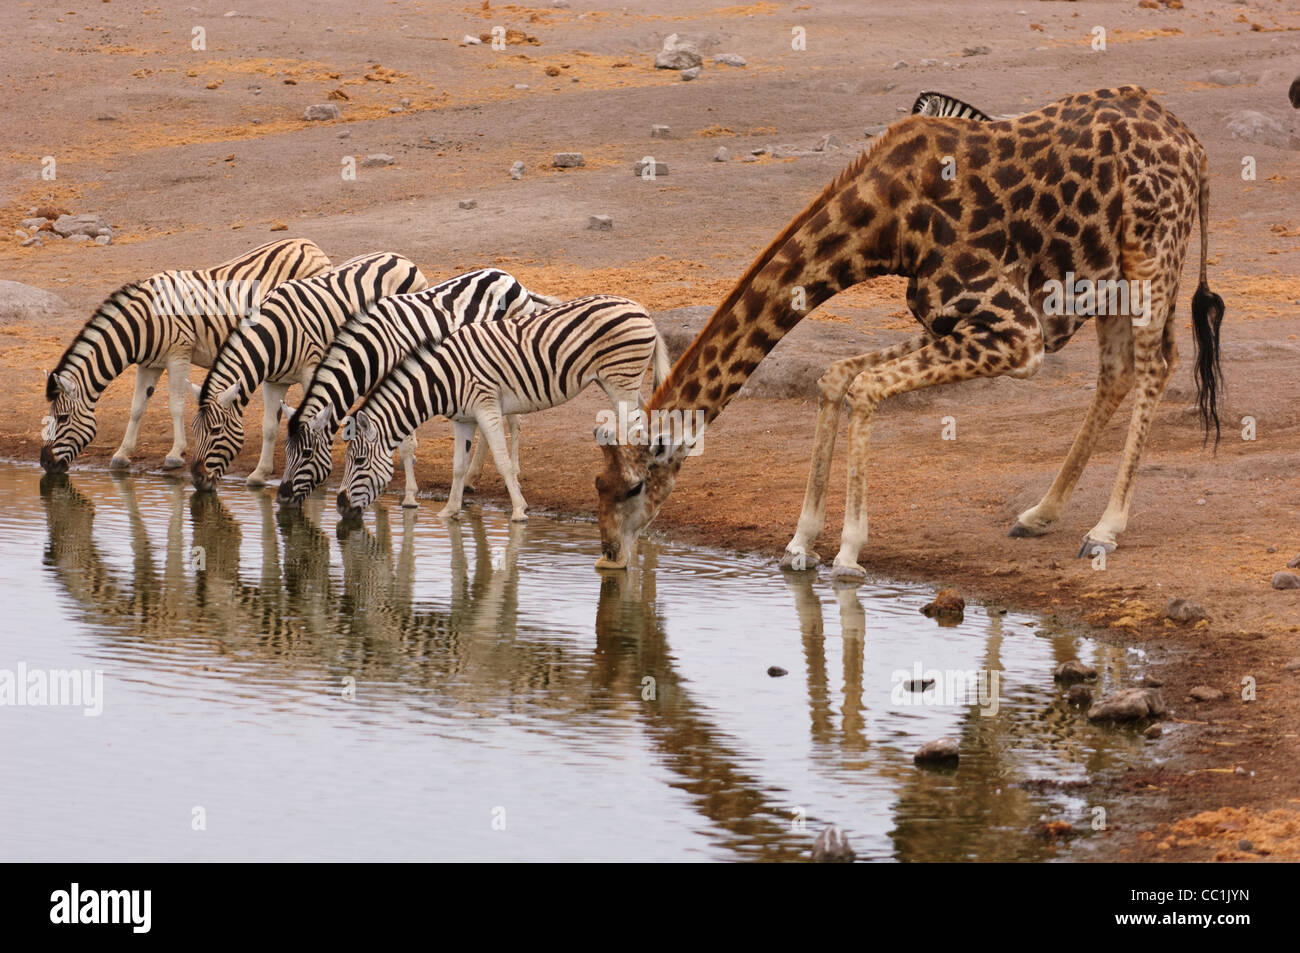 Drinking giraffe and zebras at a water hole. Etosha National Park, Namibia. Stock Photo